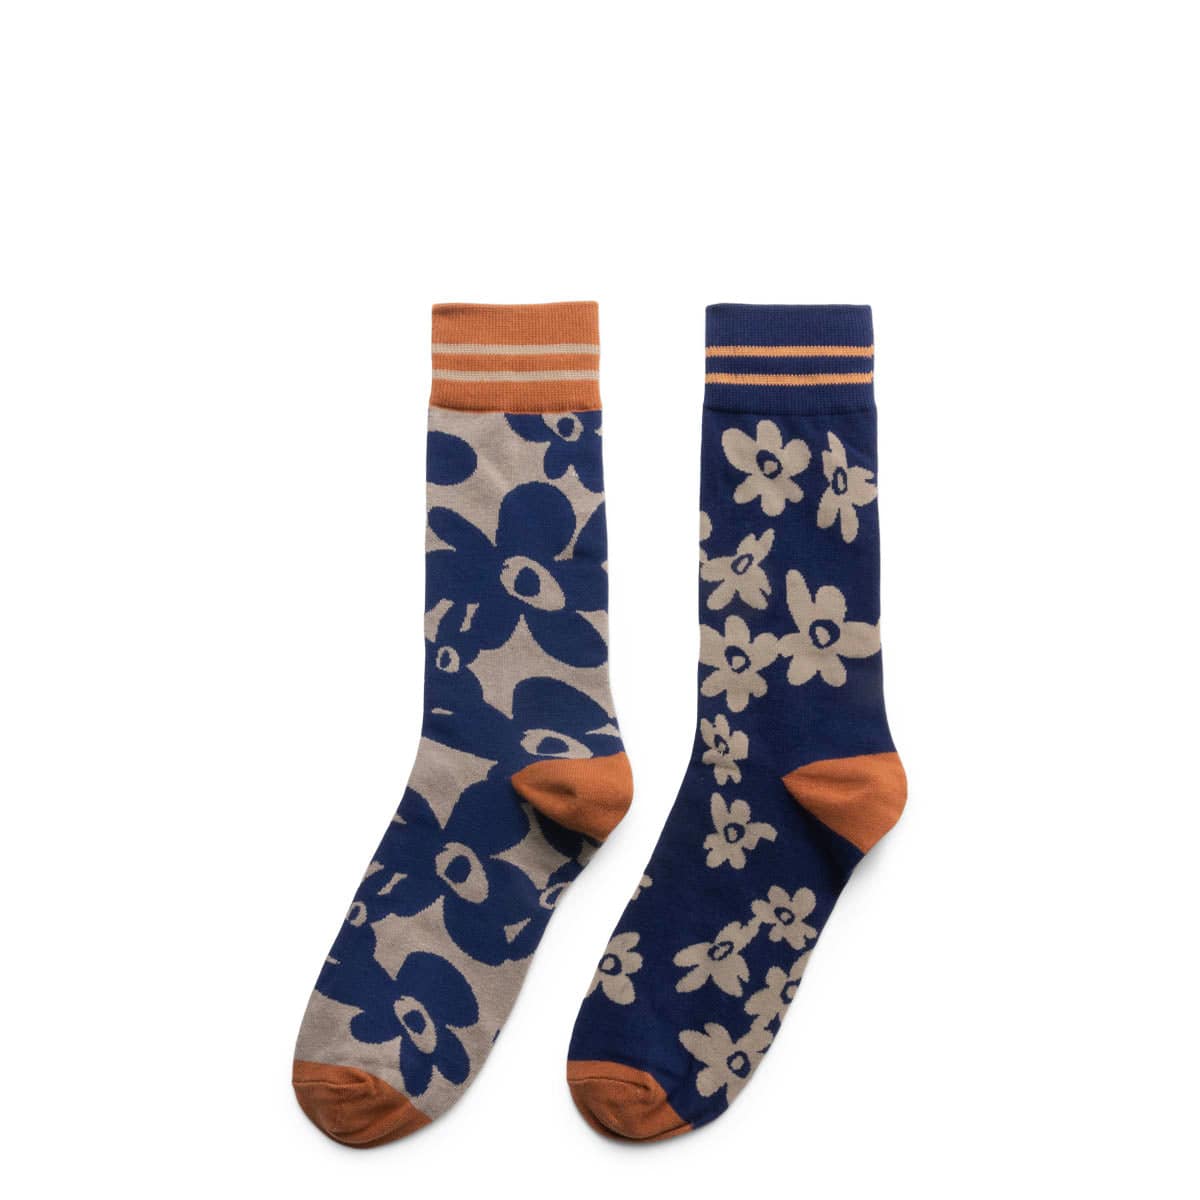 Perks and Mini Socks INK BLUE / O/S FLOATING GESTURES SOCK